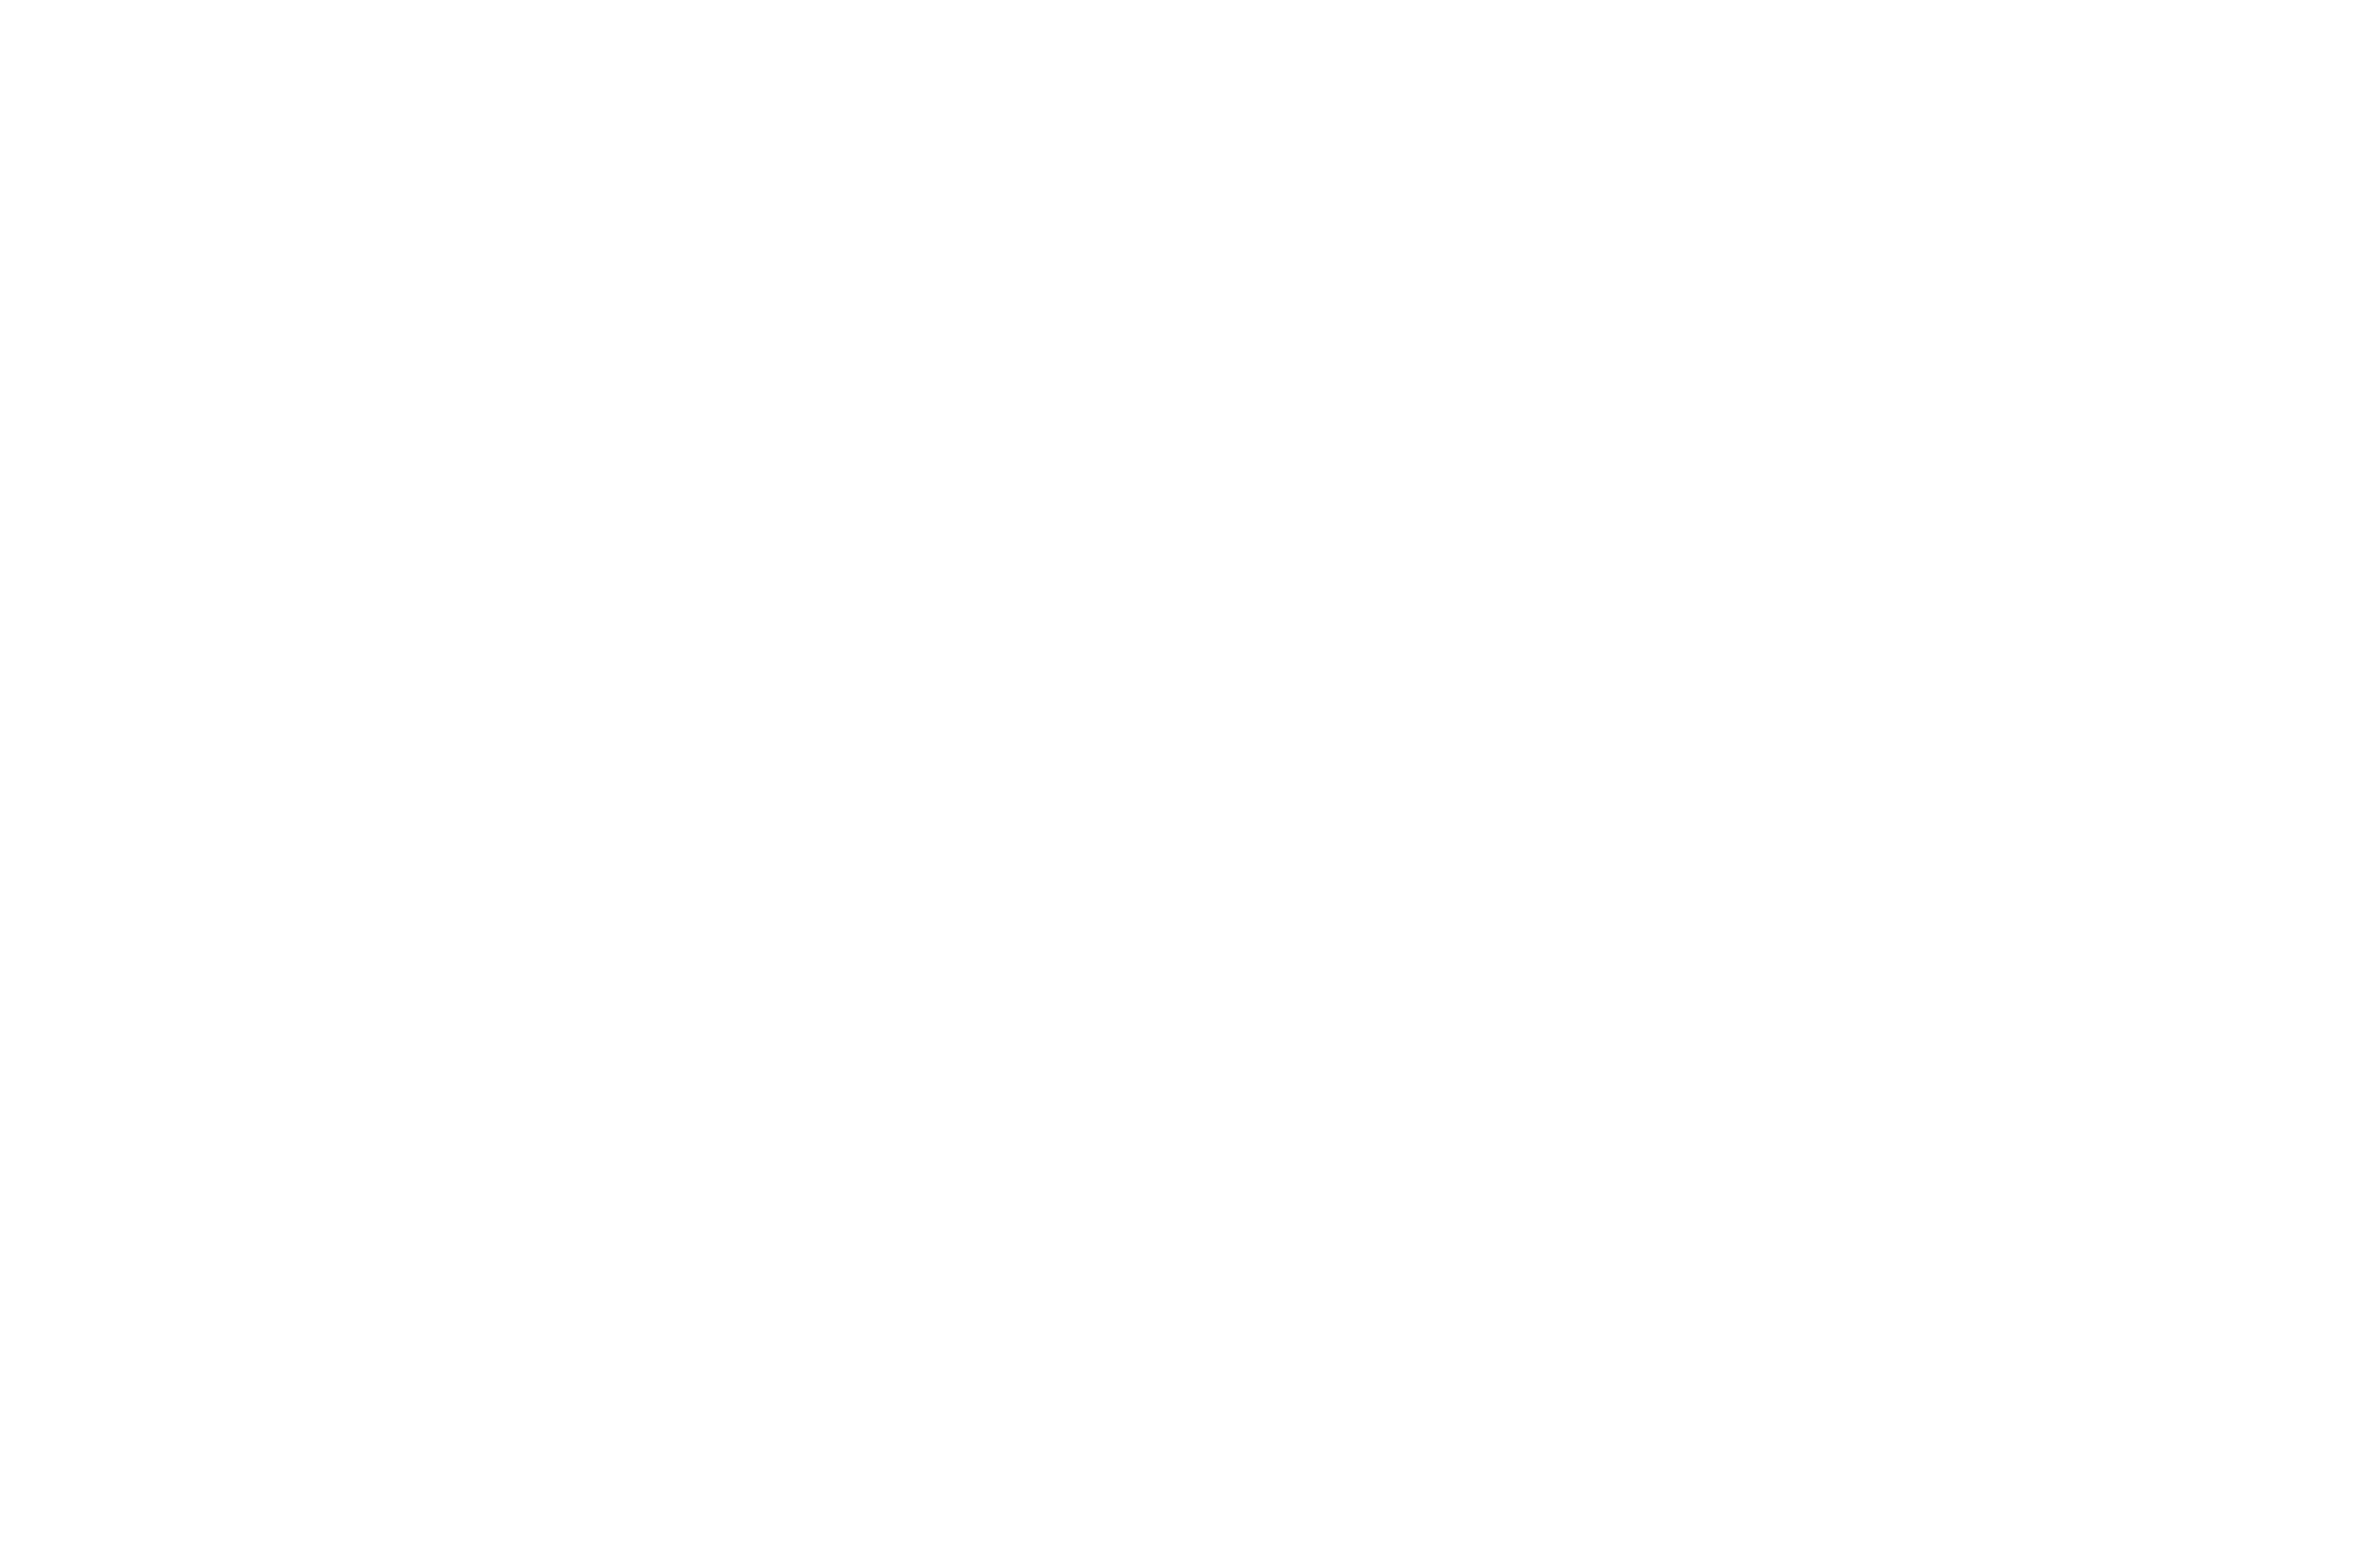 2ndplace-OnArtPoland-2020-1.png